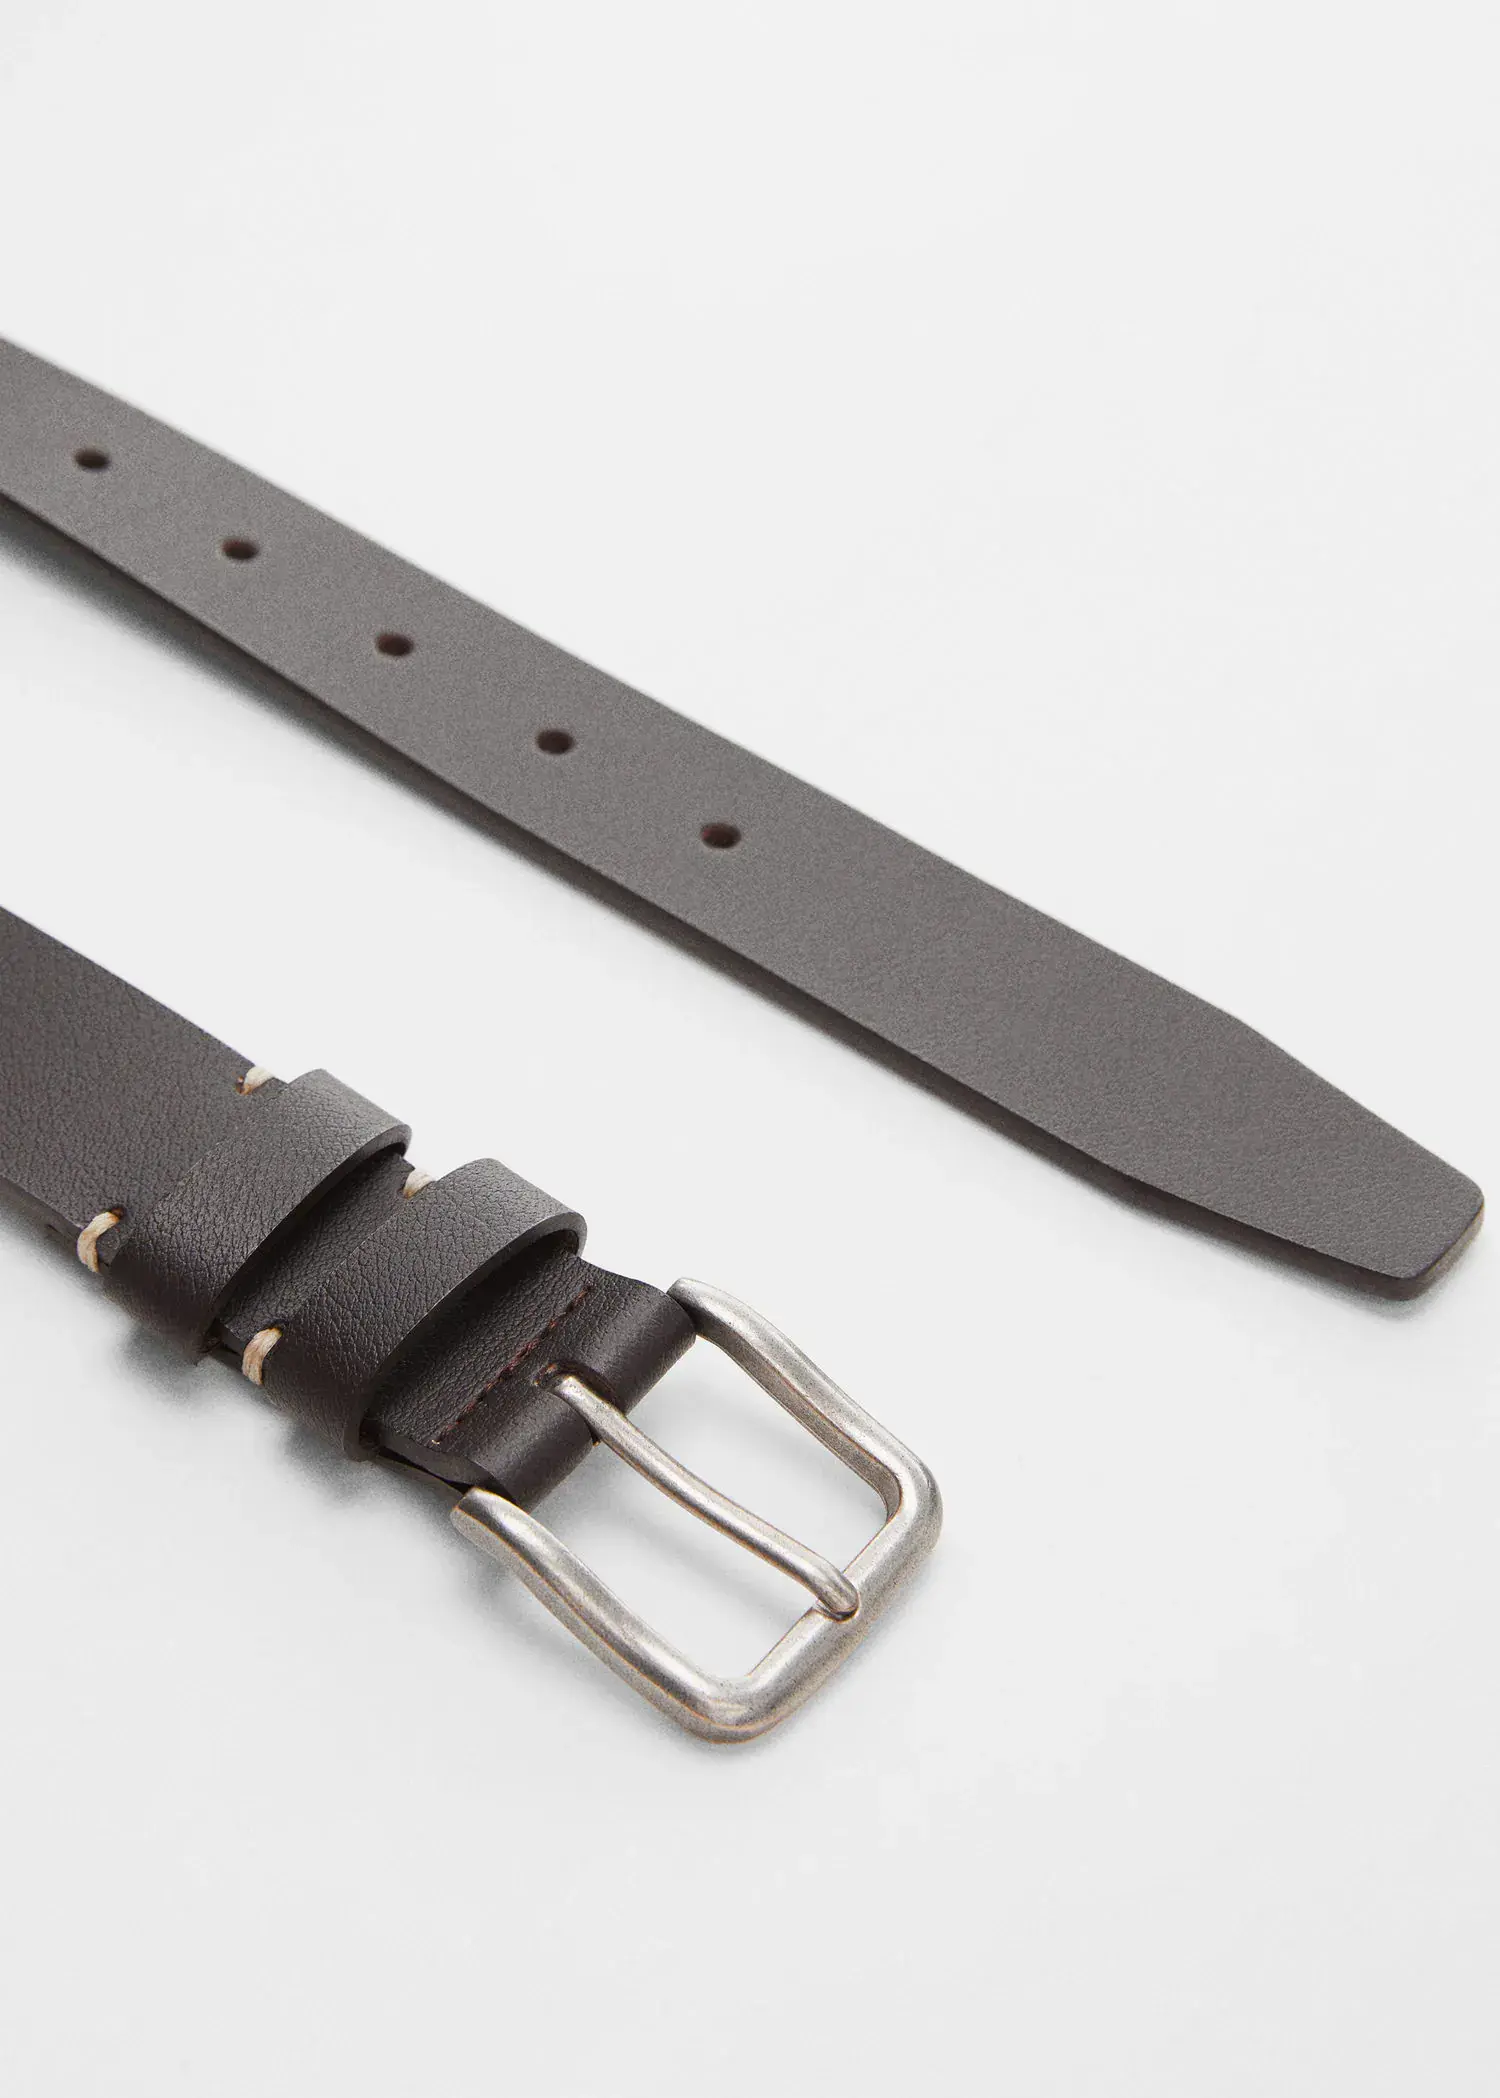 Mango Buckle leather belt. 1